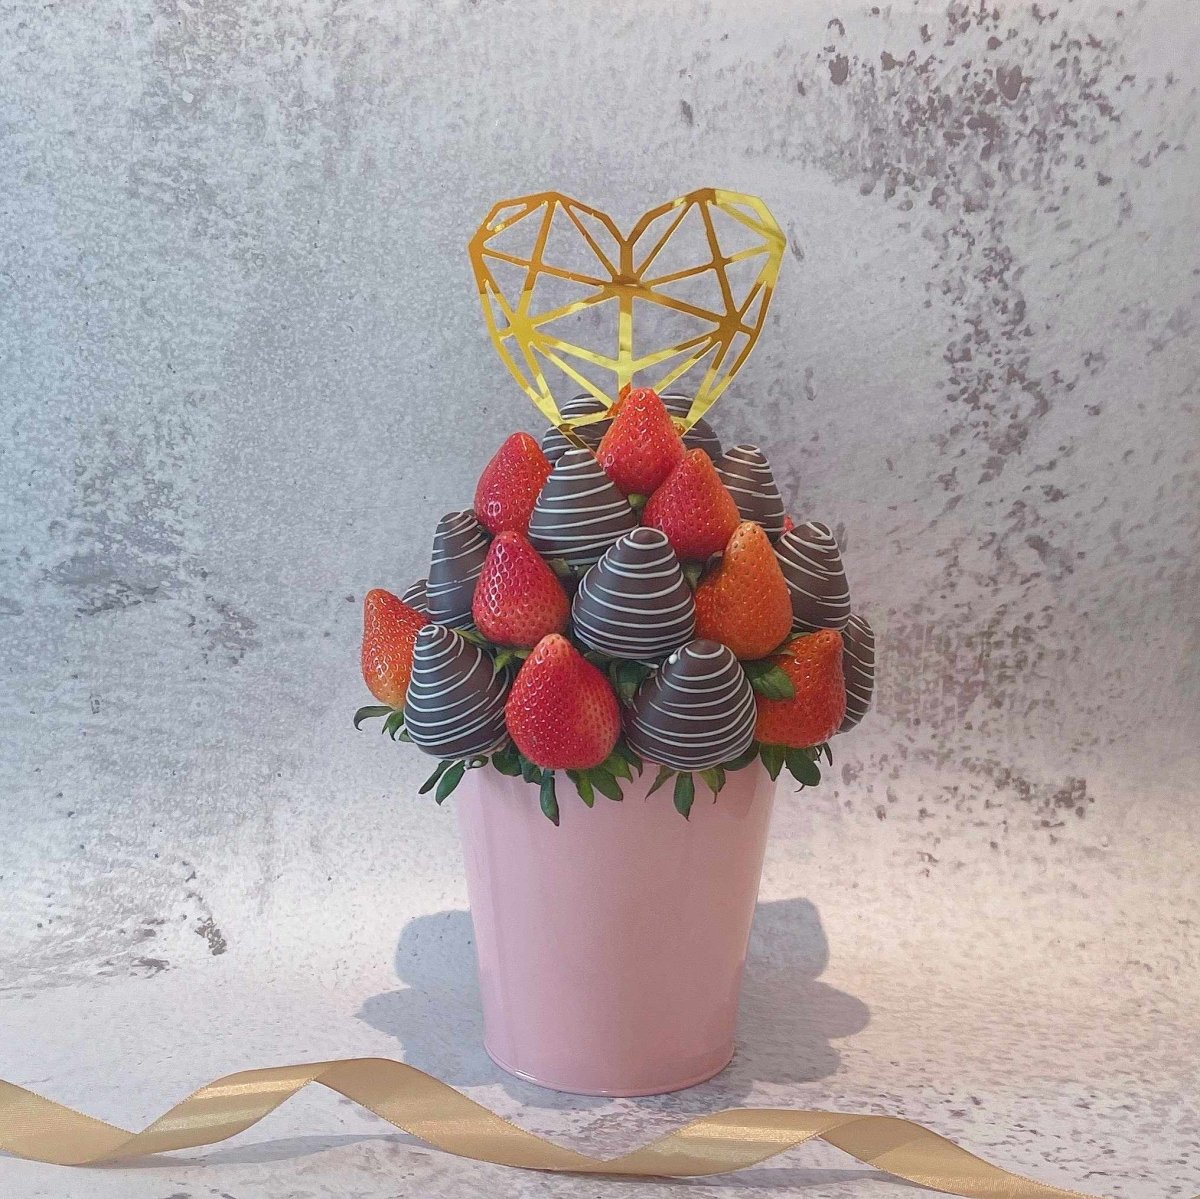 Fruit Bouquet - Healthier Love Fresh Fruit Arrangement Hamper with Chocolate Coated Strawberries - Rainbowly Fresh Fruit Gift and Flower Arrangments